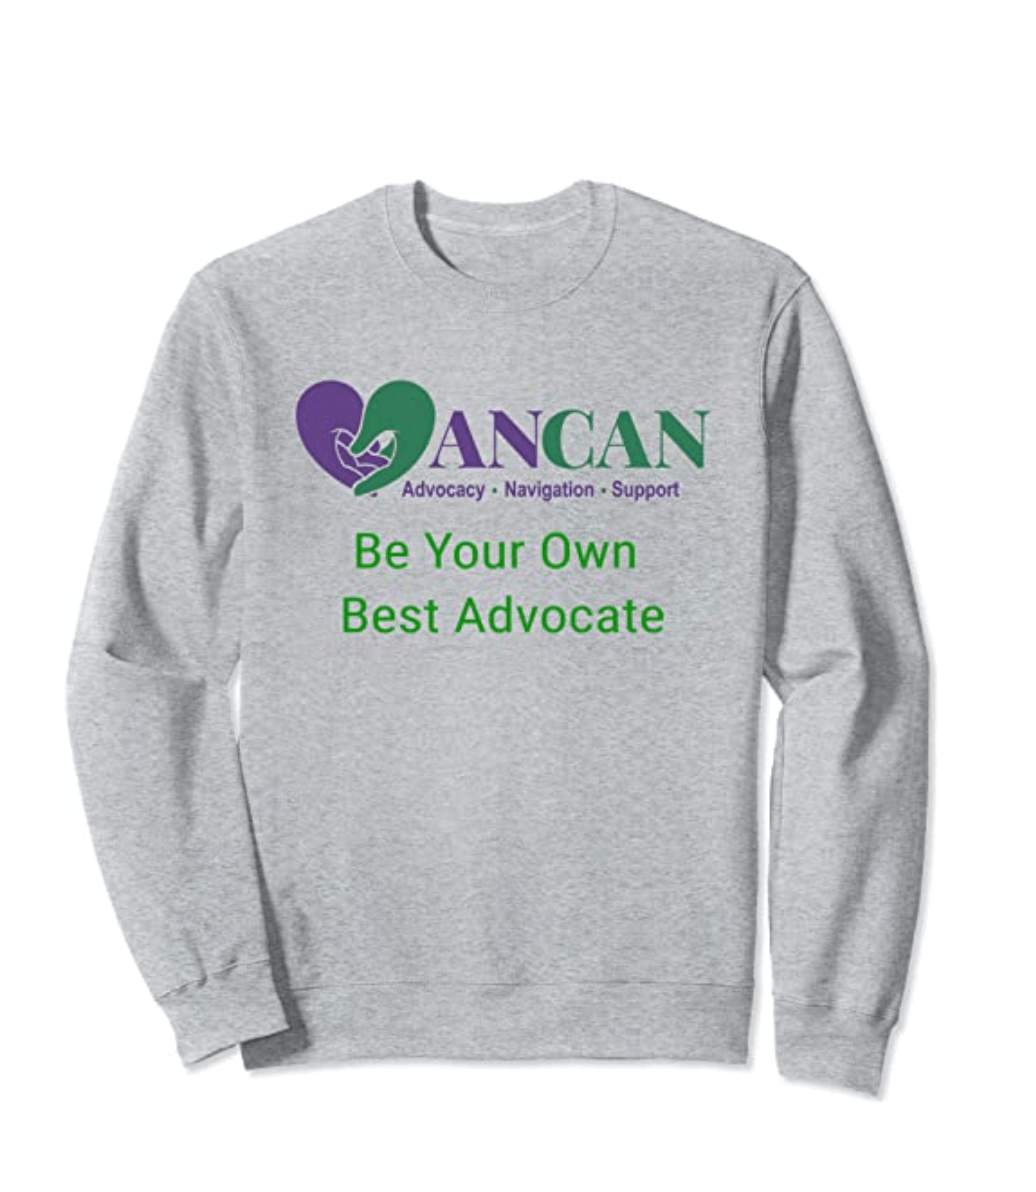 AnCan sweatshirt in grey with green writing